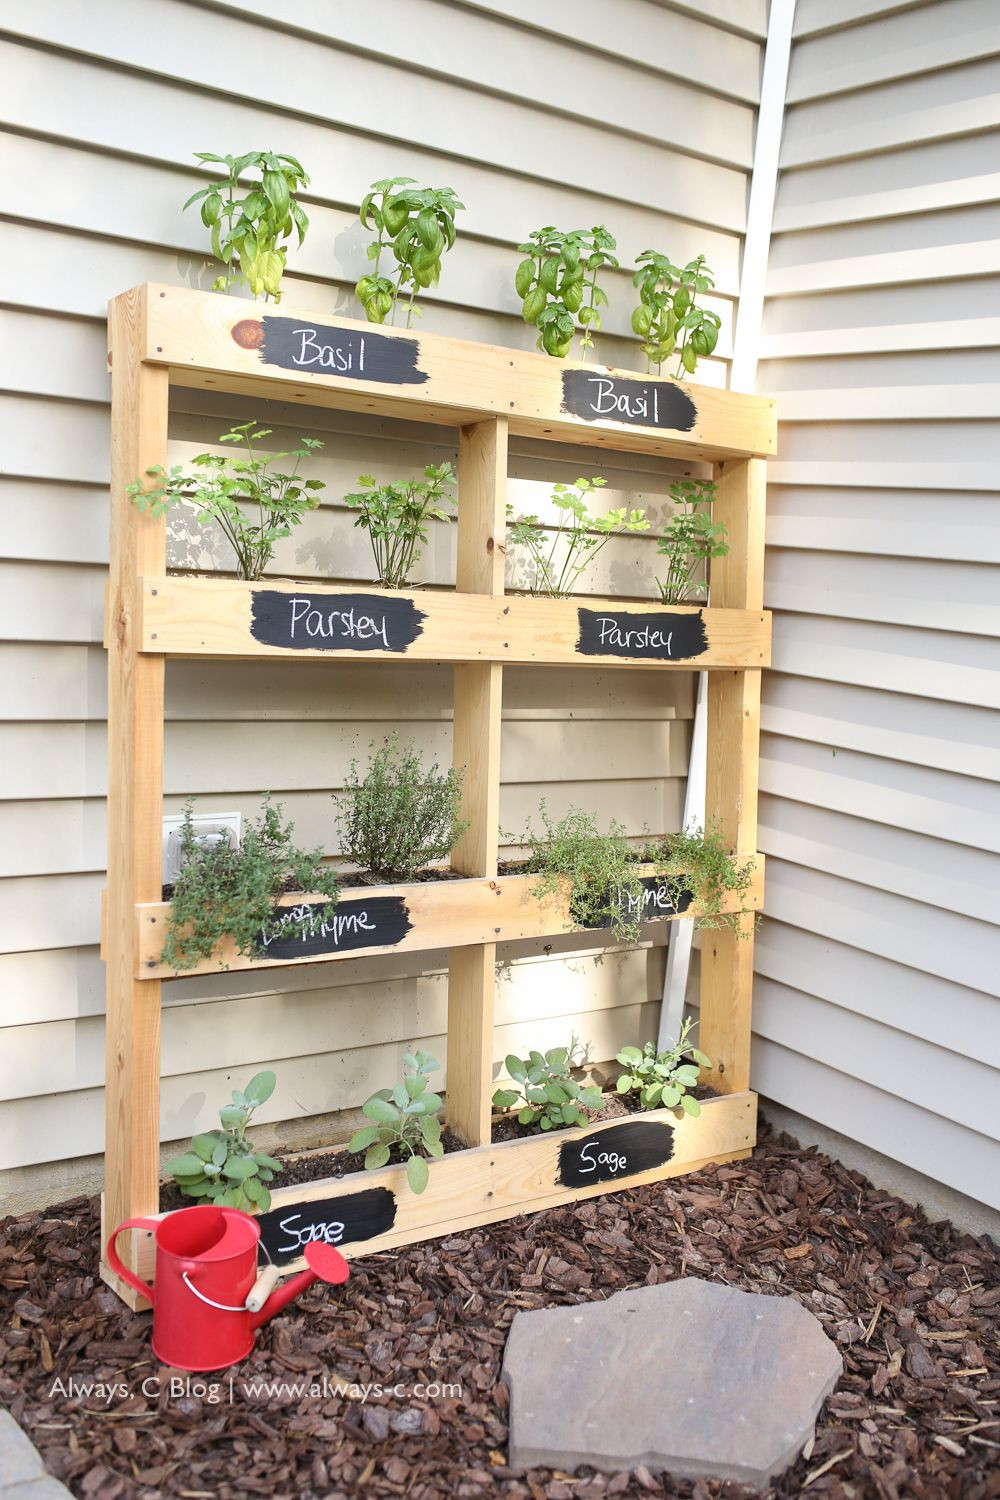 Best ideas about DIY Pallet Planter
. Save or Pin Pallet Herb Garden DIY The Pink Lemonade Blog Now.